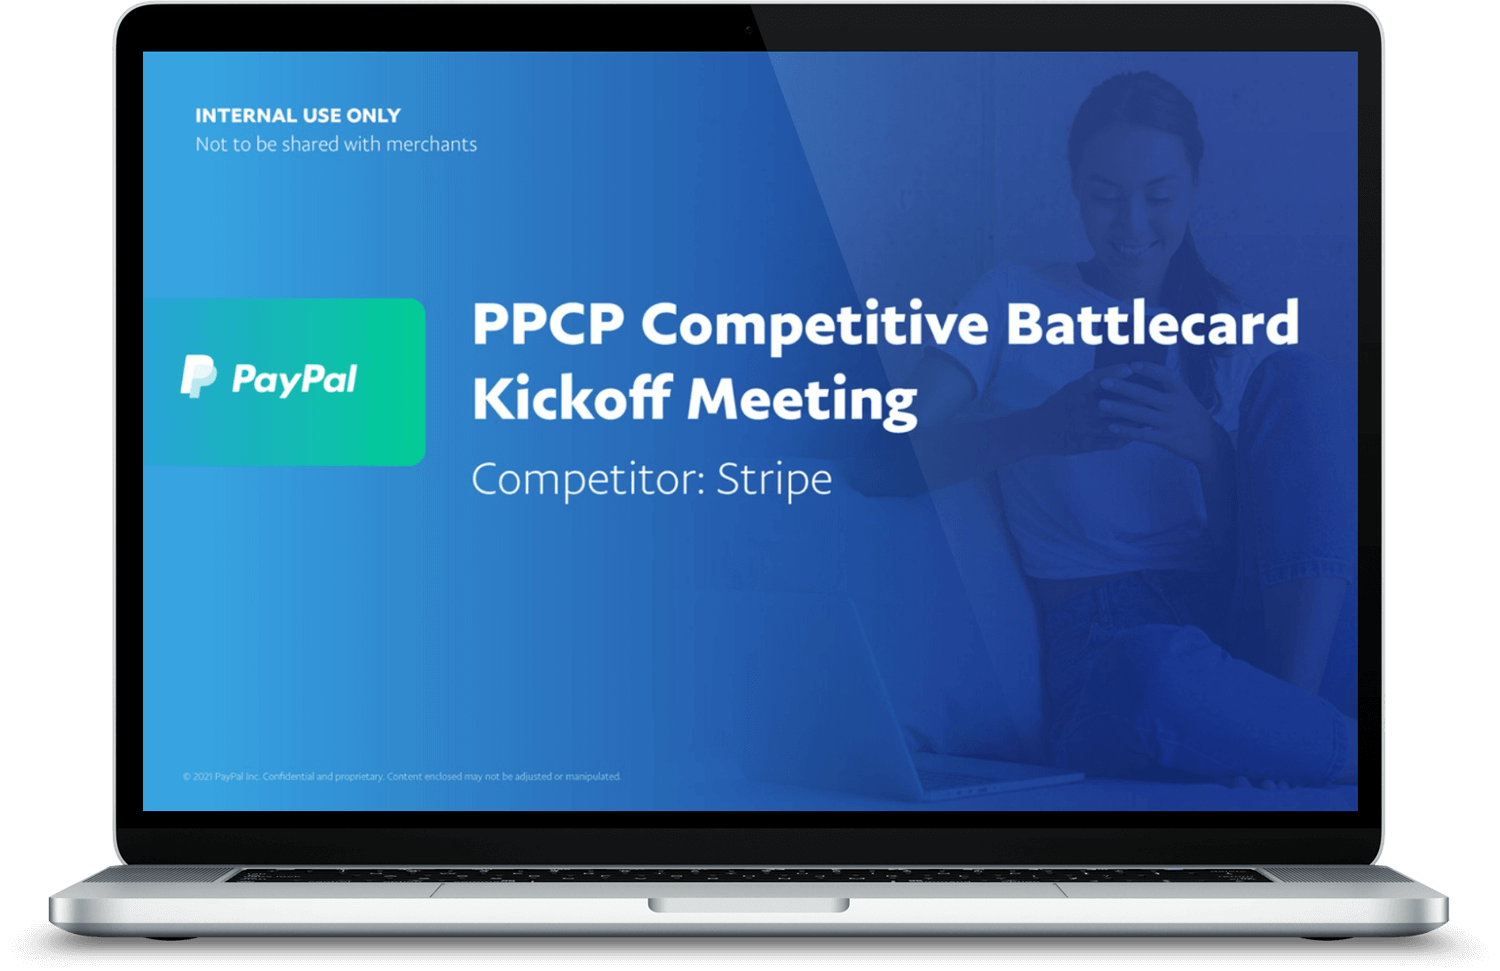 PayPal vs Stripe Battlecard